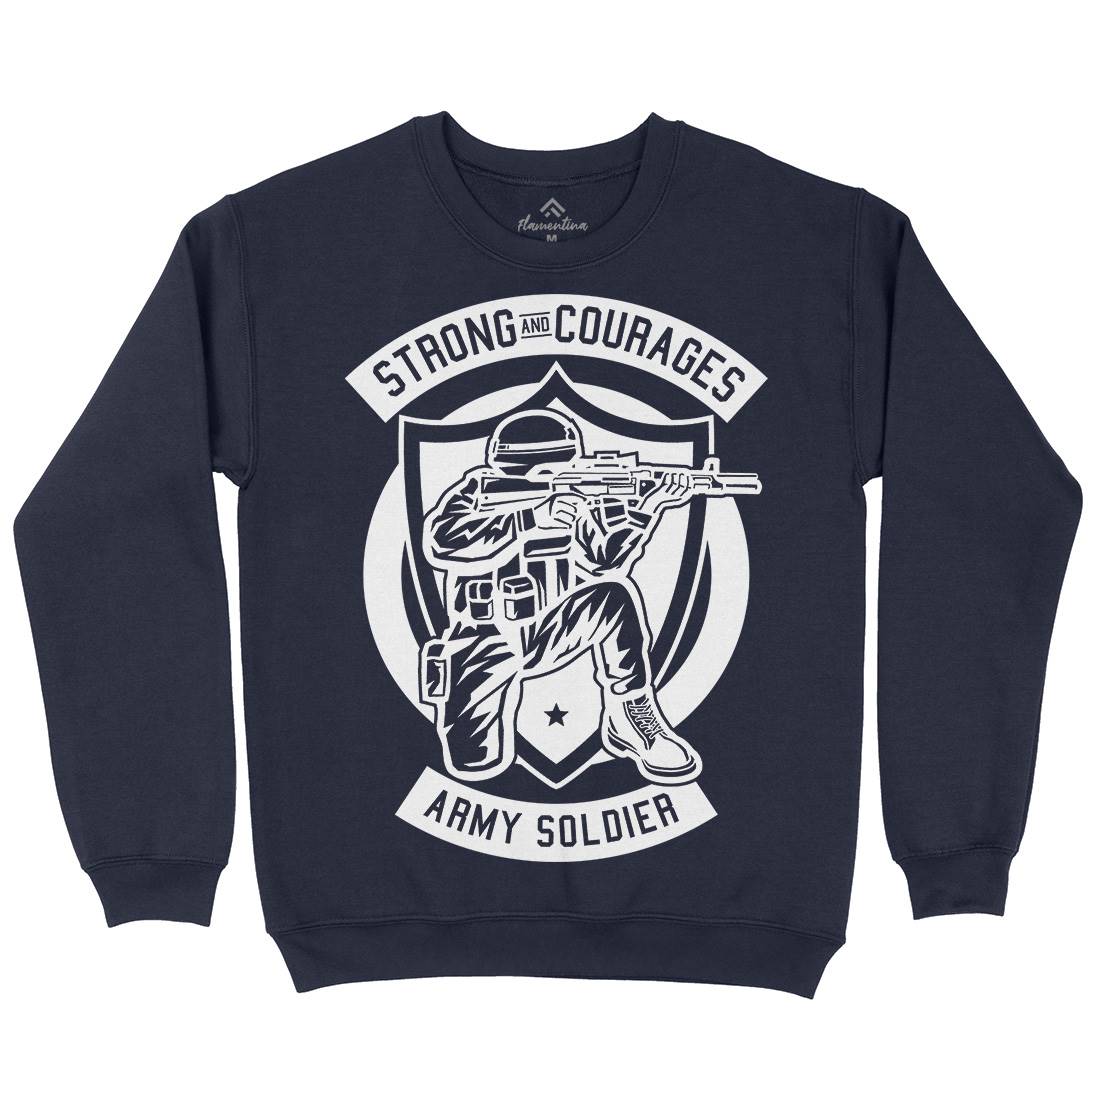 Army Soldier Mens Crew Neck Sweatshirt Army B483